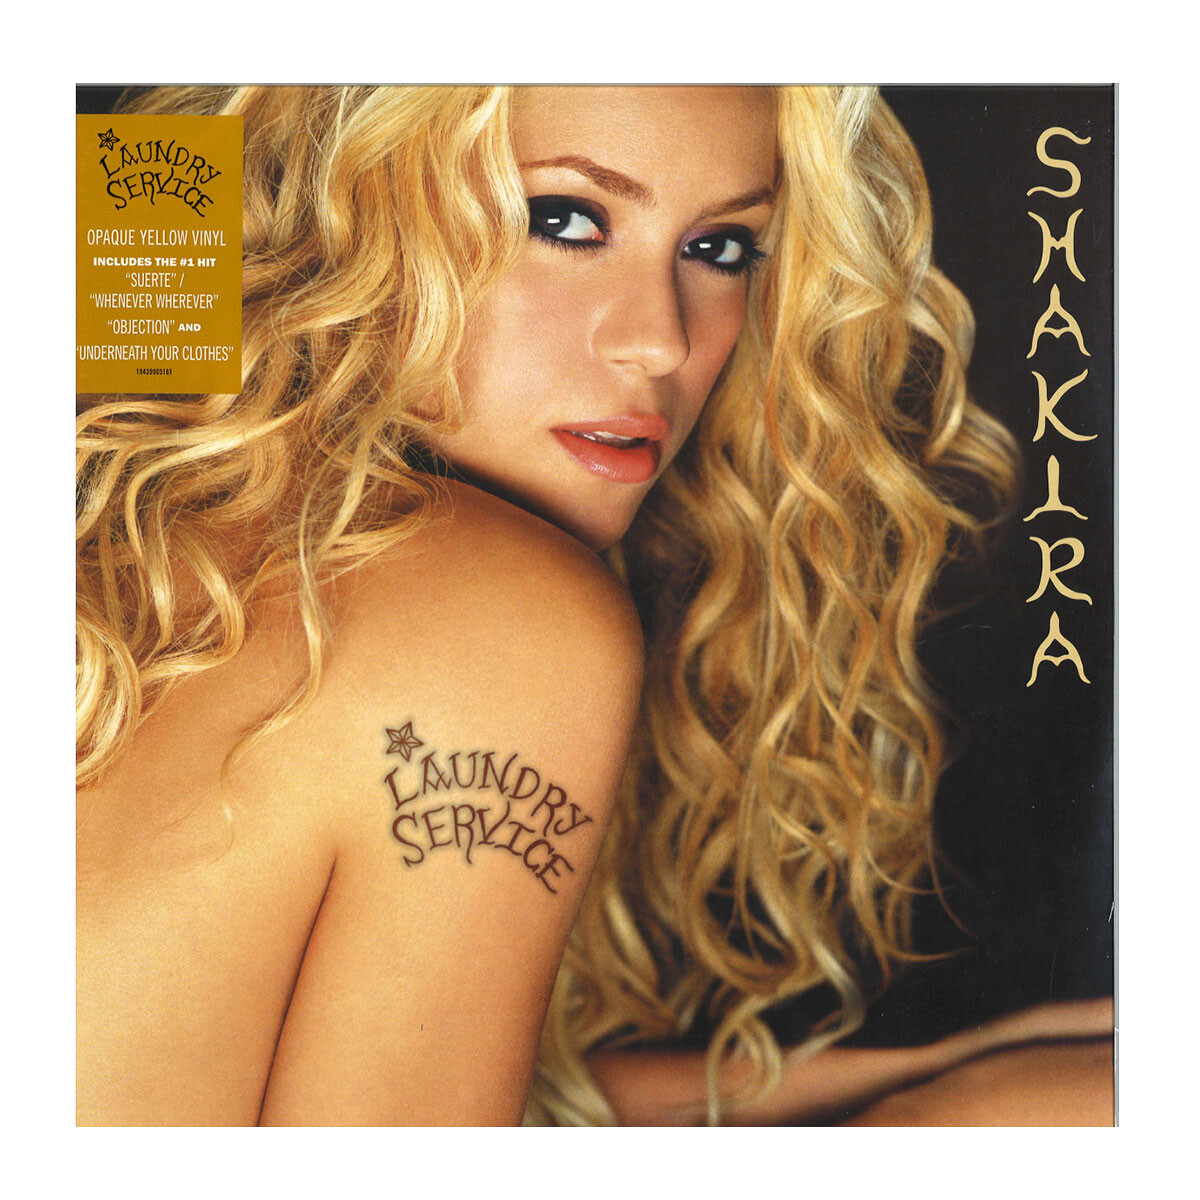 Shakira Laundry Service Wide Release Opaque - Vinilo 